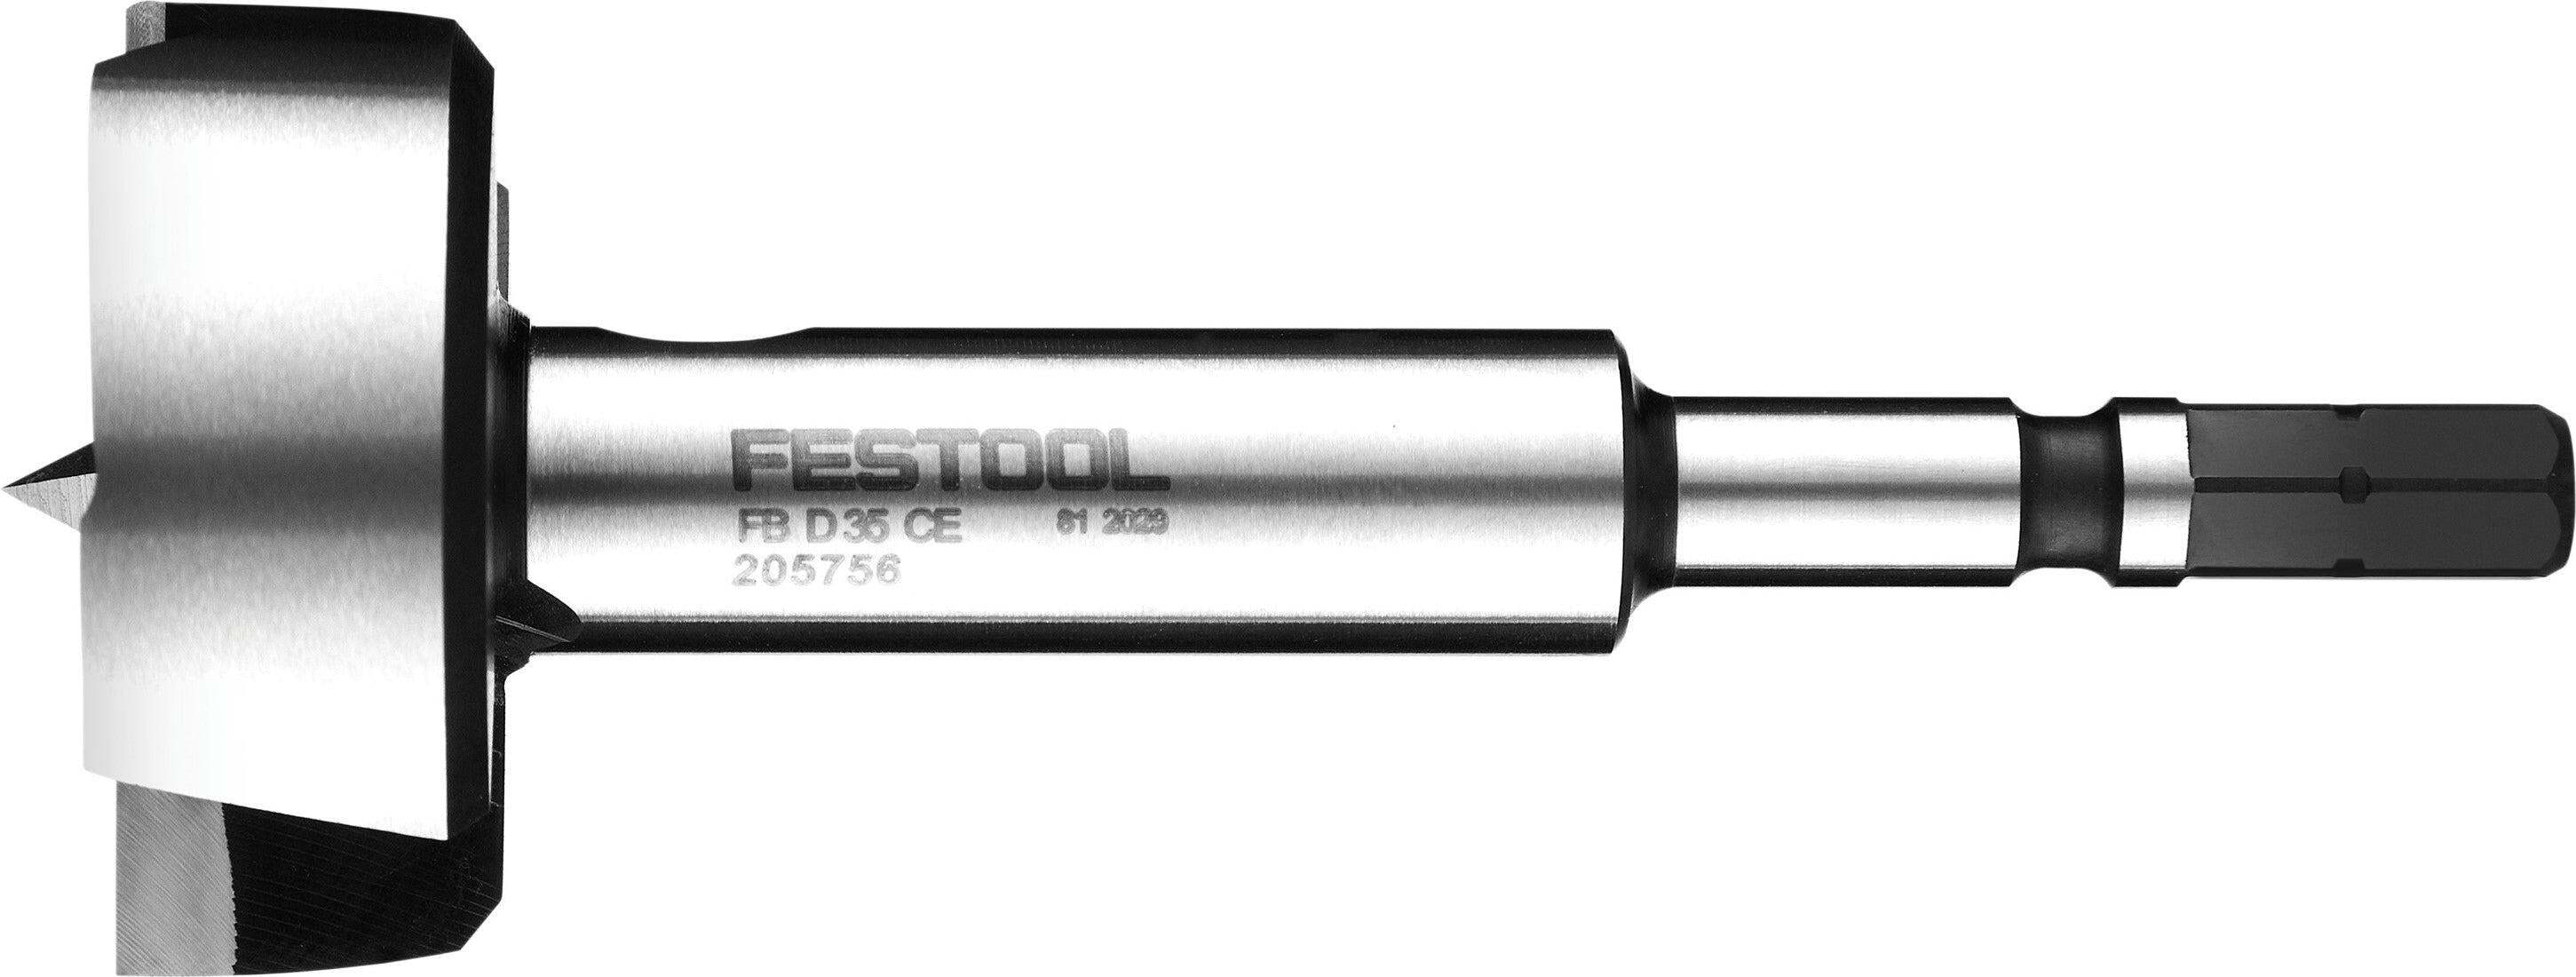 Festool FB D 35 CE Cilinderkopboor - 205756